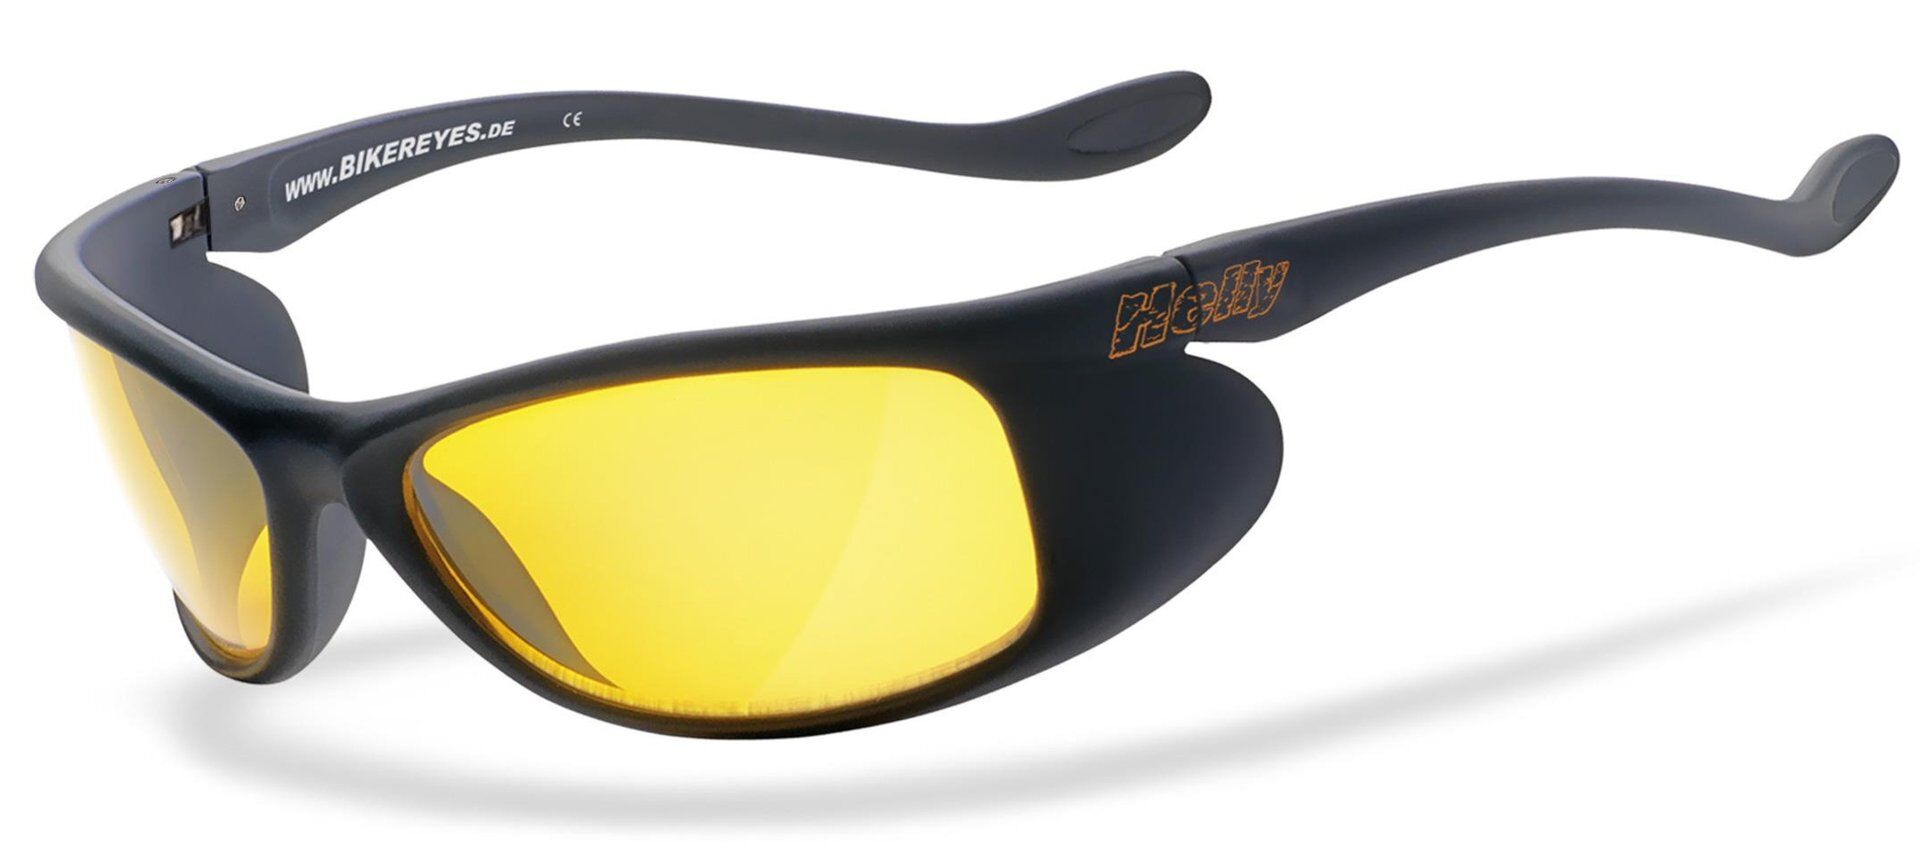 Helly Bikereyes Top Speed 4 Solbriller